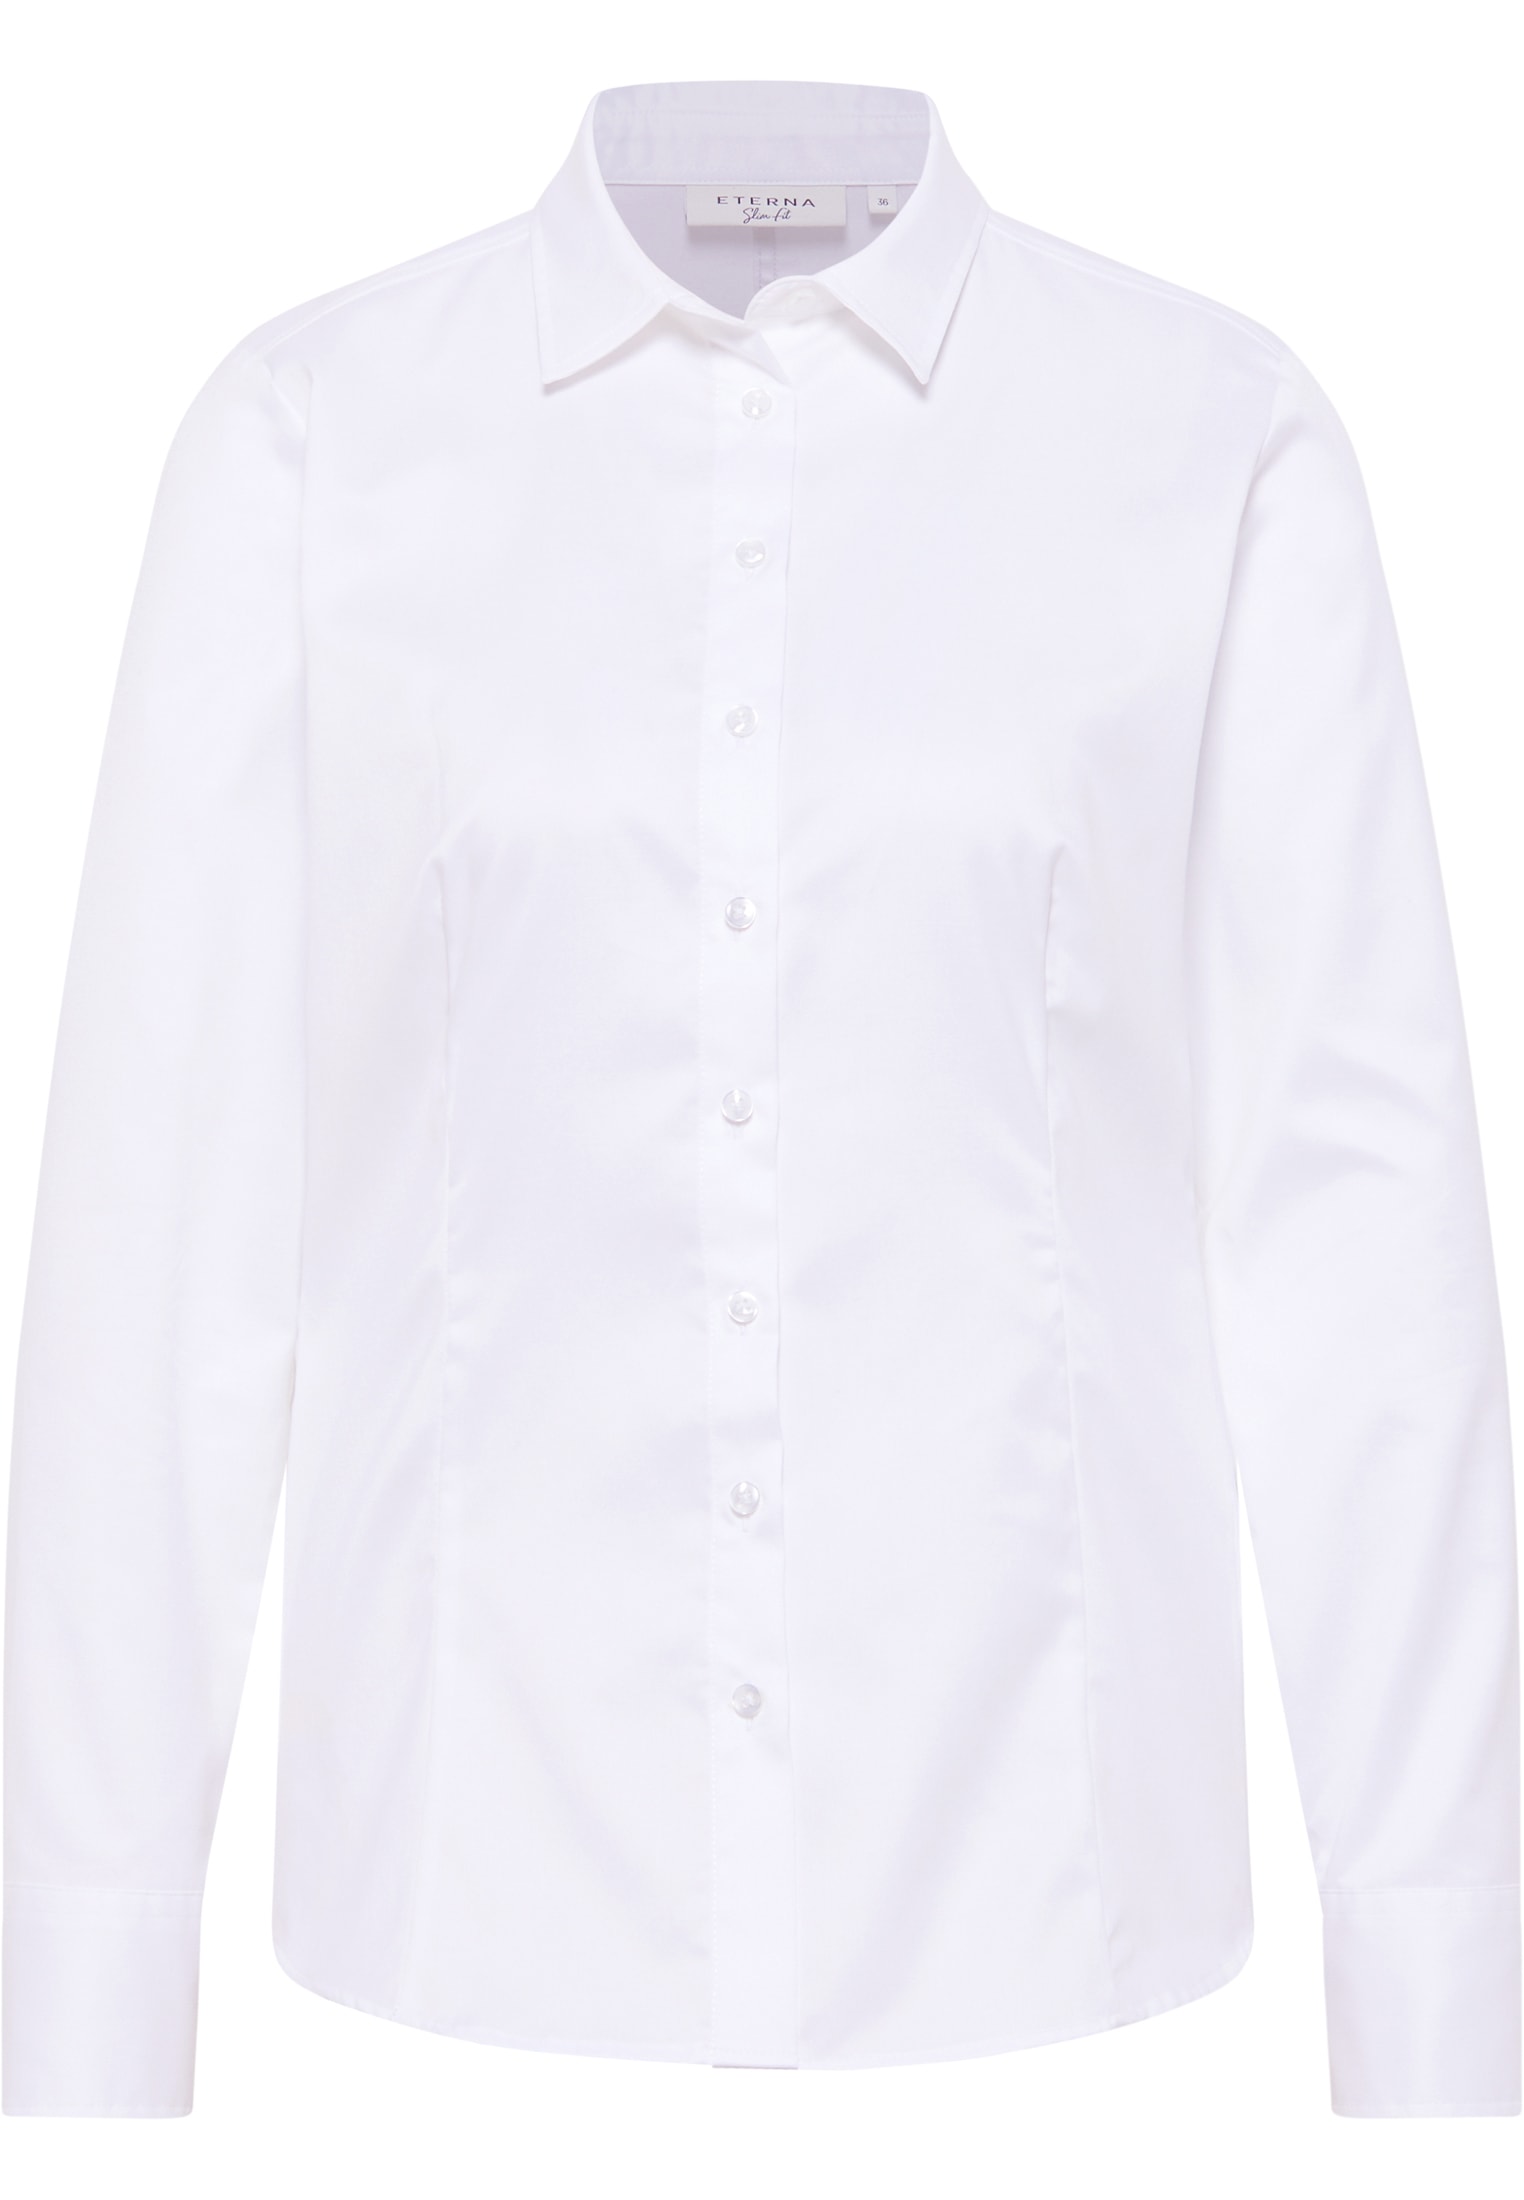 weiß Cover | Shirt Bluse 2BL00073-00-01-34-1/1 34 in unifarben weiß | | | Langarm